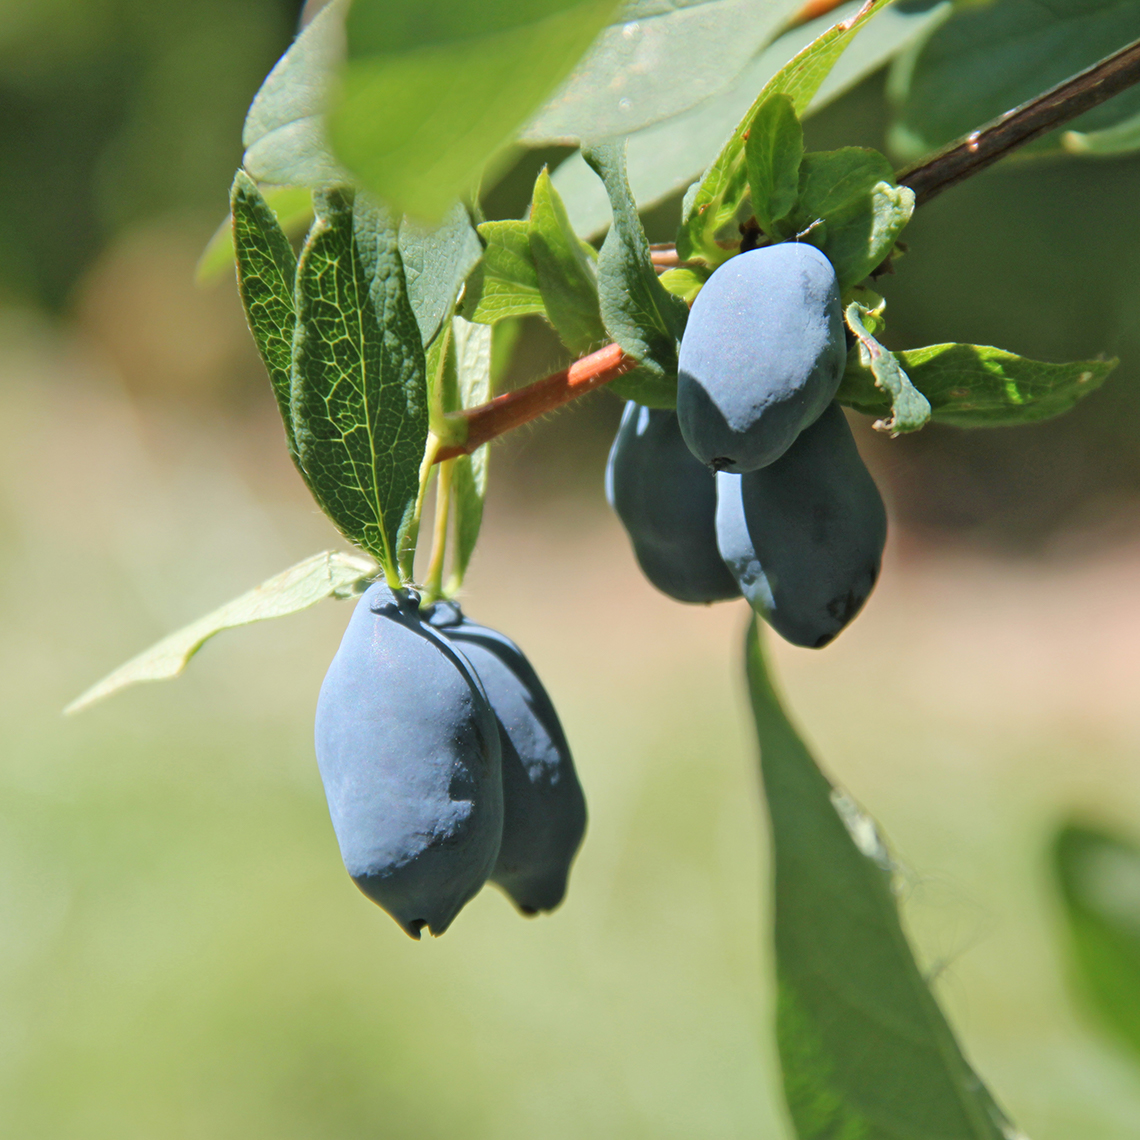 Close up of blue Yezberry Sugar Pie Lonicera berries on vine